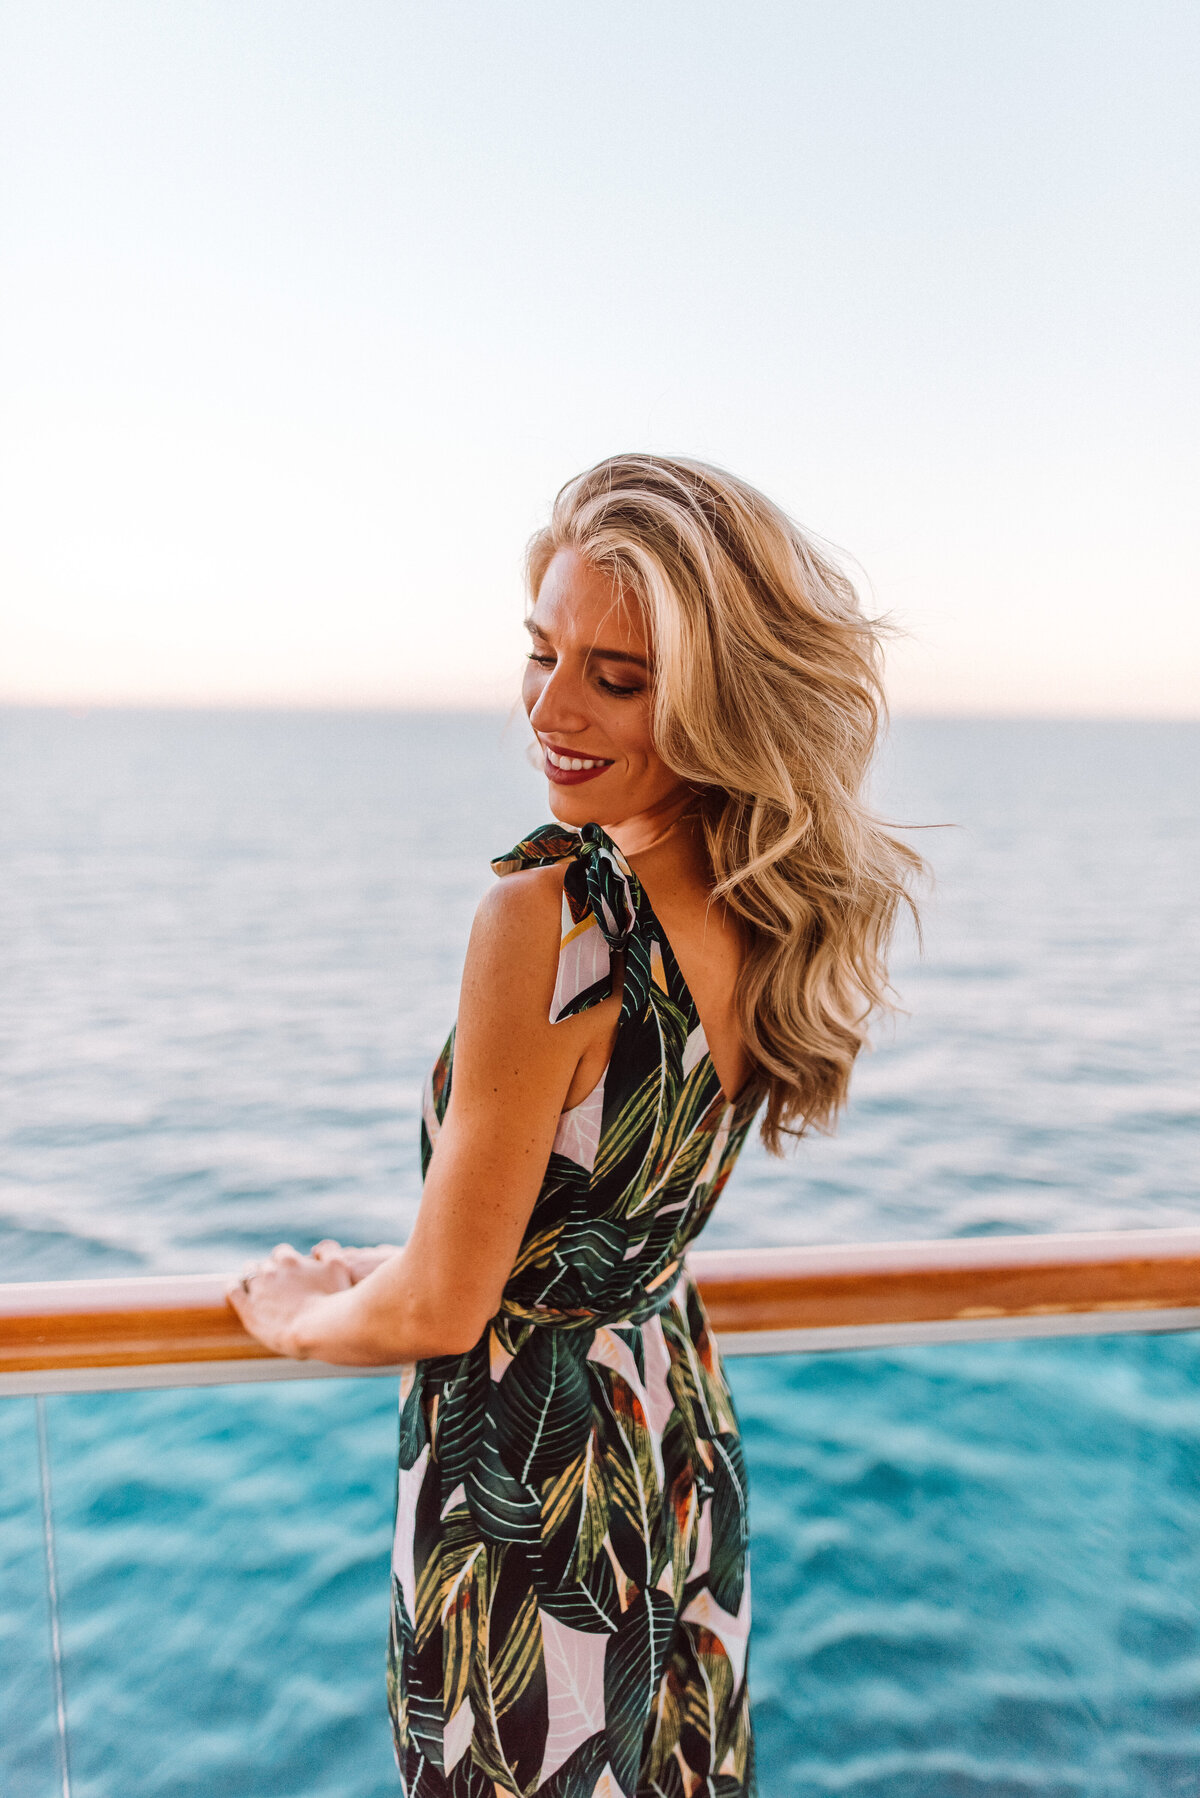 Blonde girl smiling on ocean